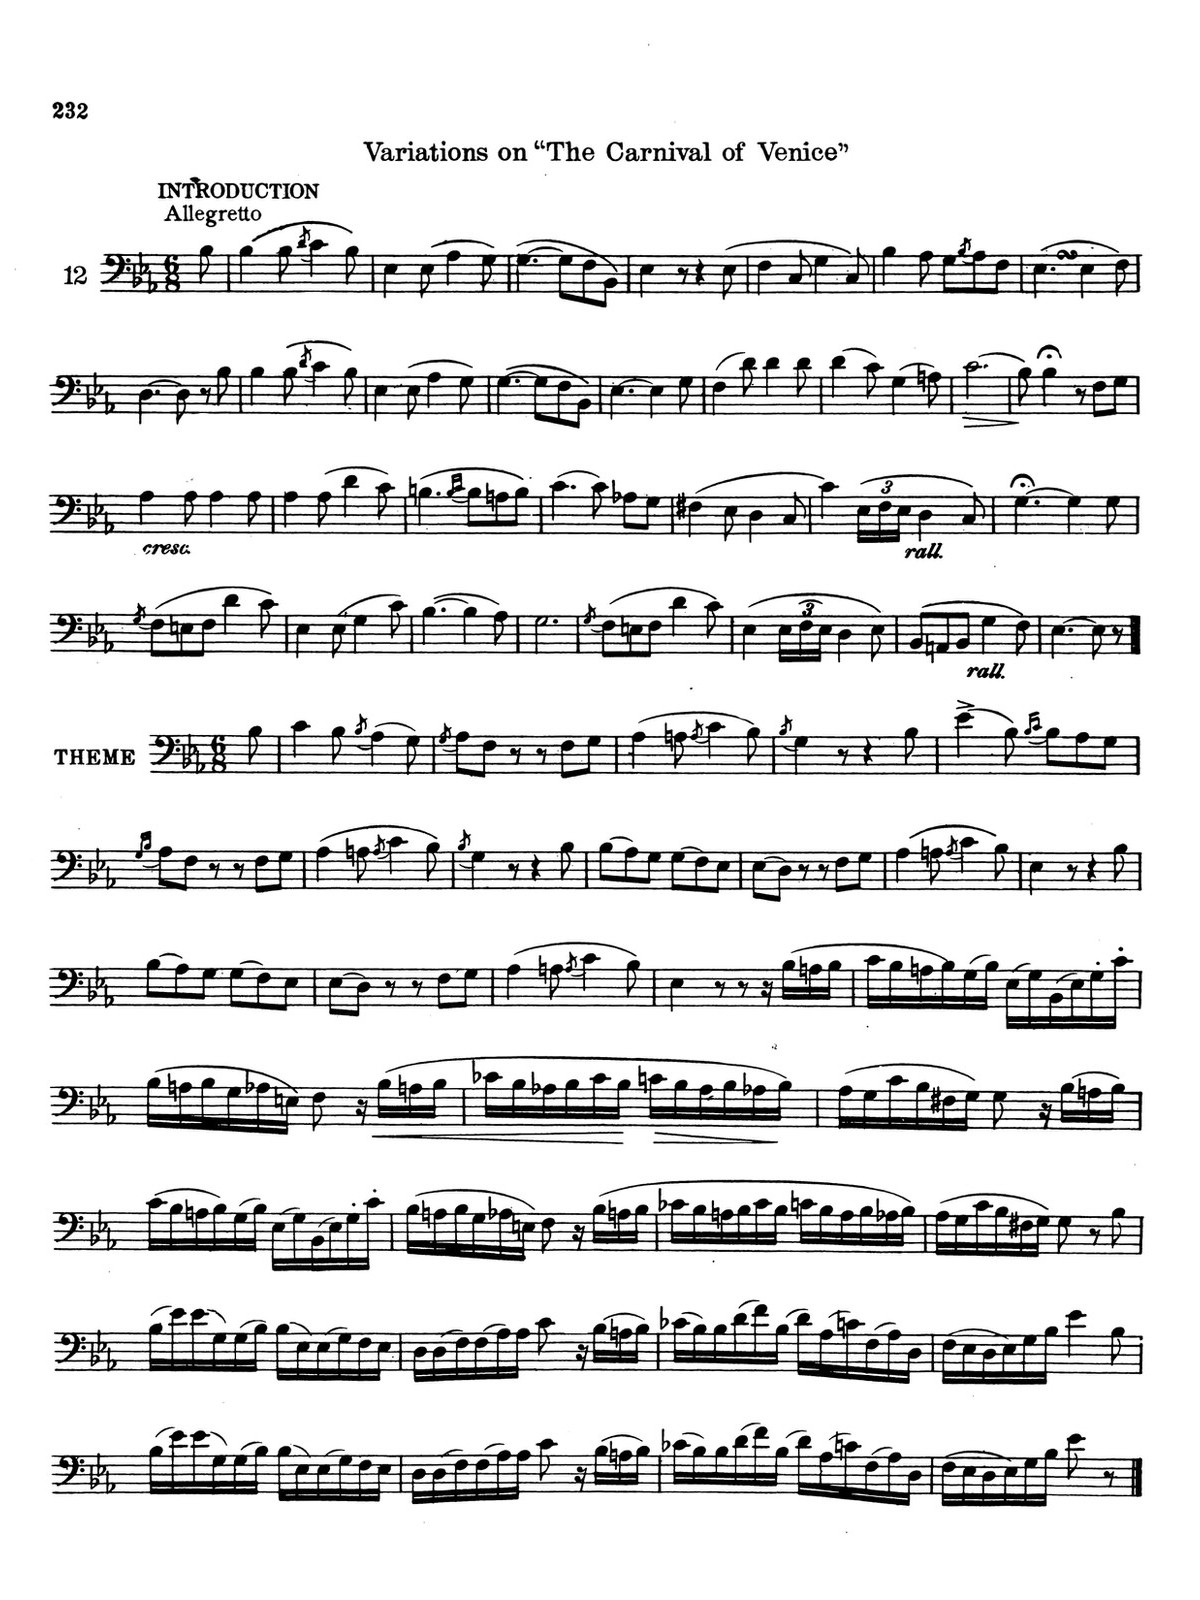 arban method for trombone